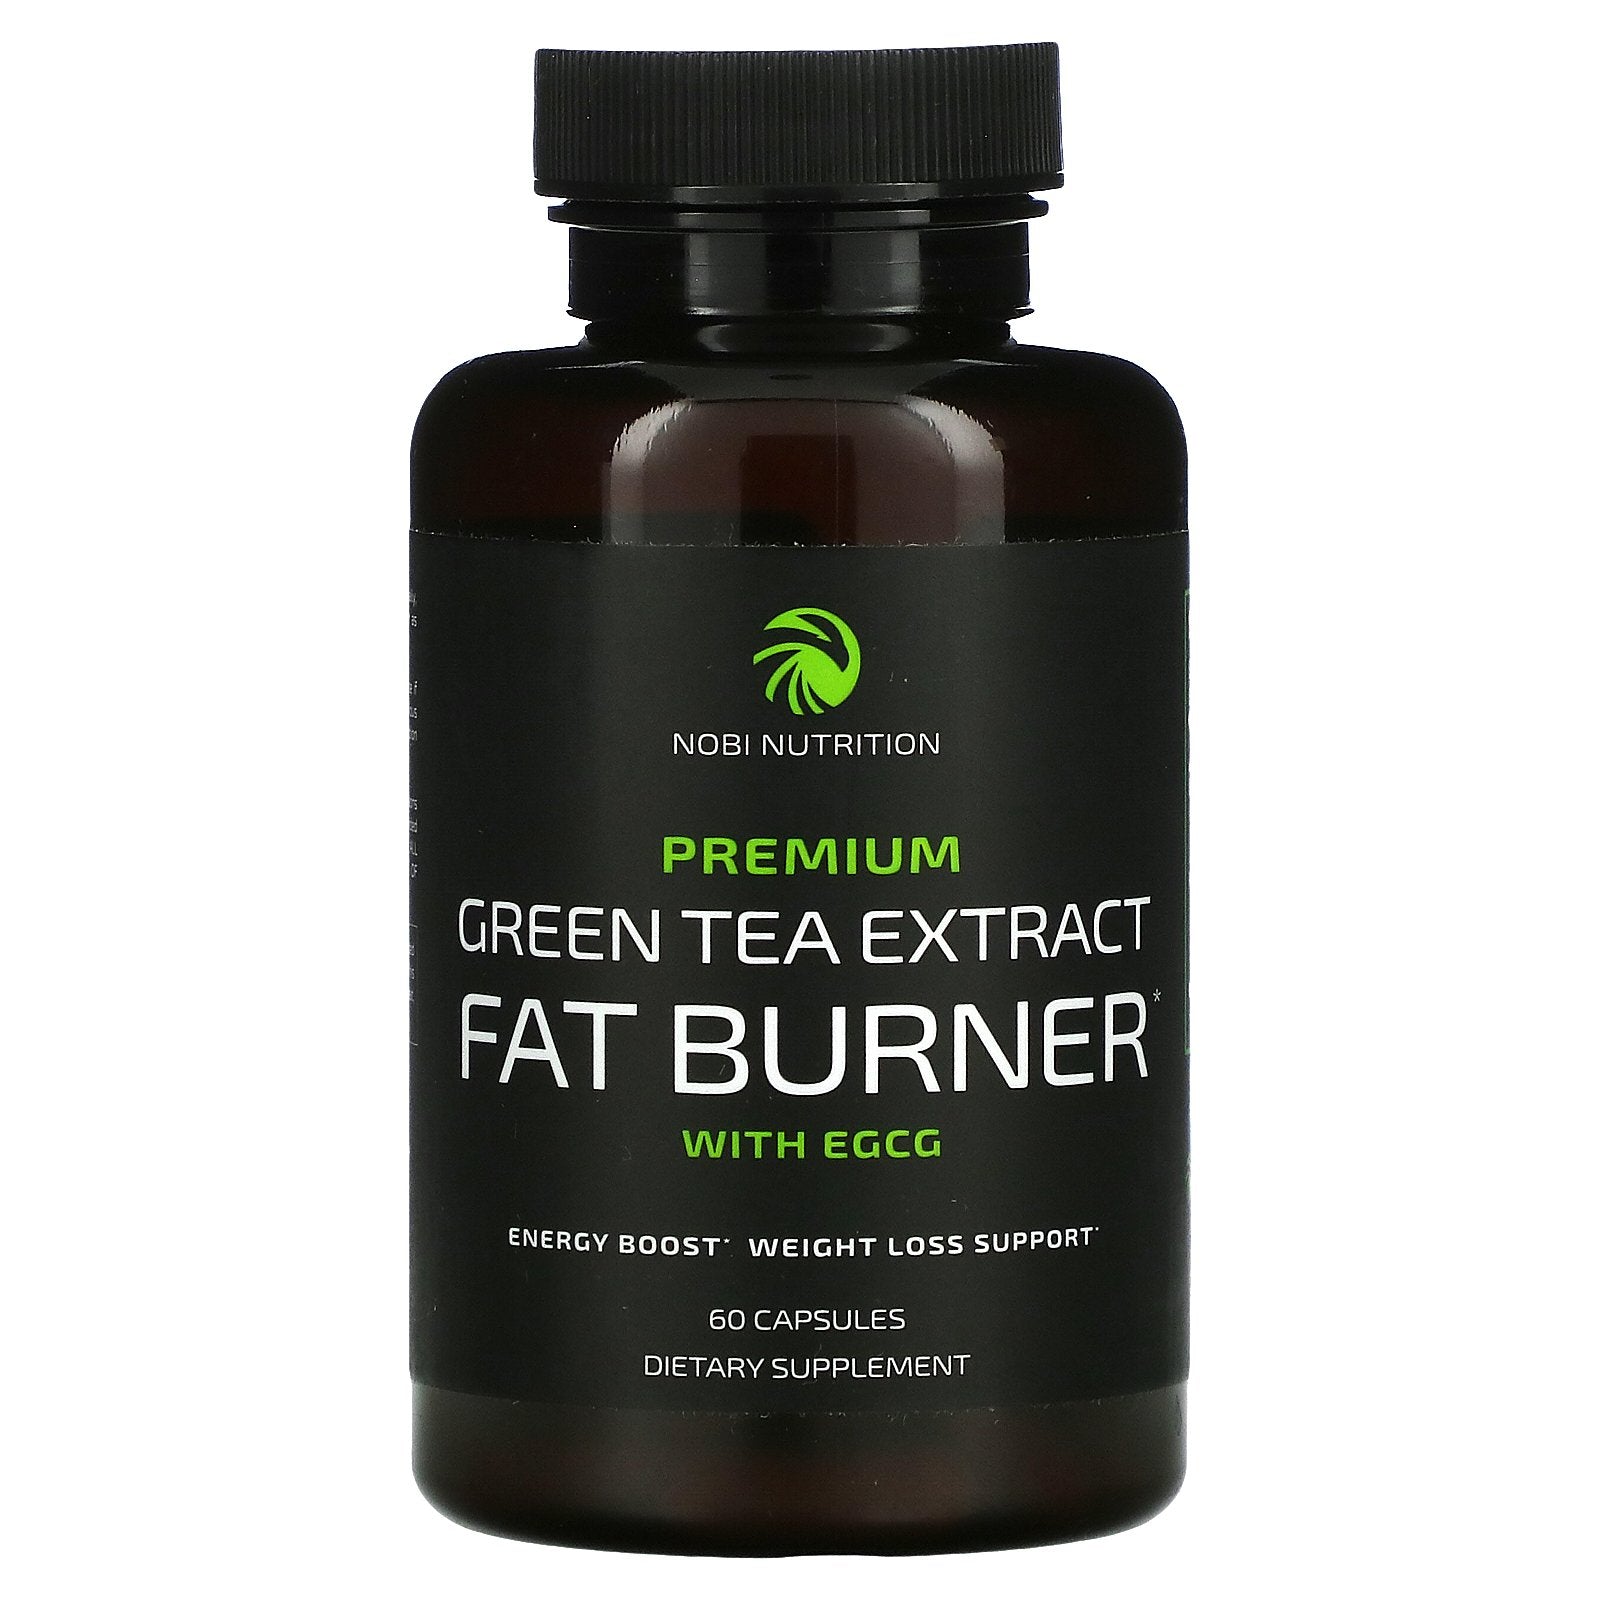 Nobi Nutrition, Premium Green Tea Extract Fat Burner with EGCG Capsules